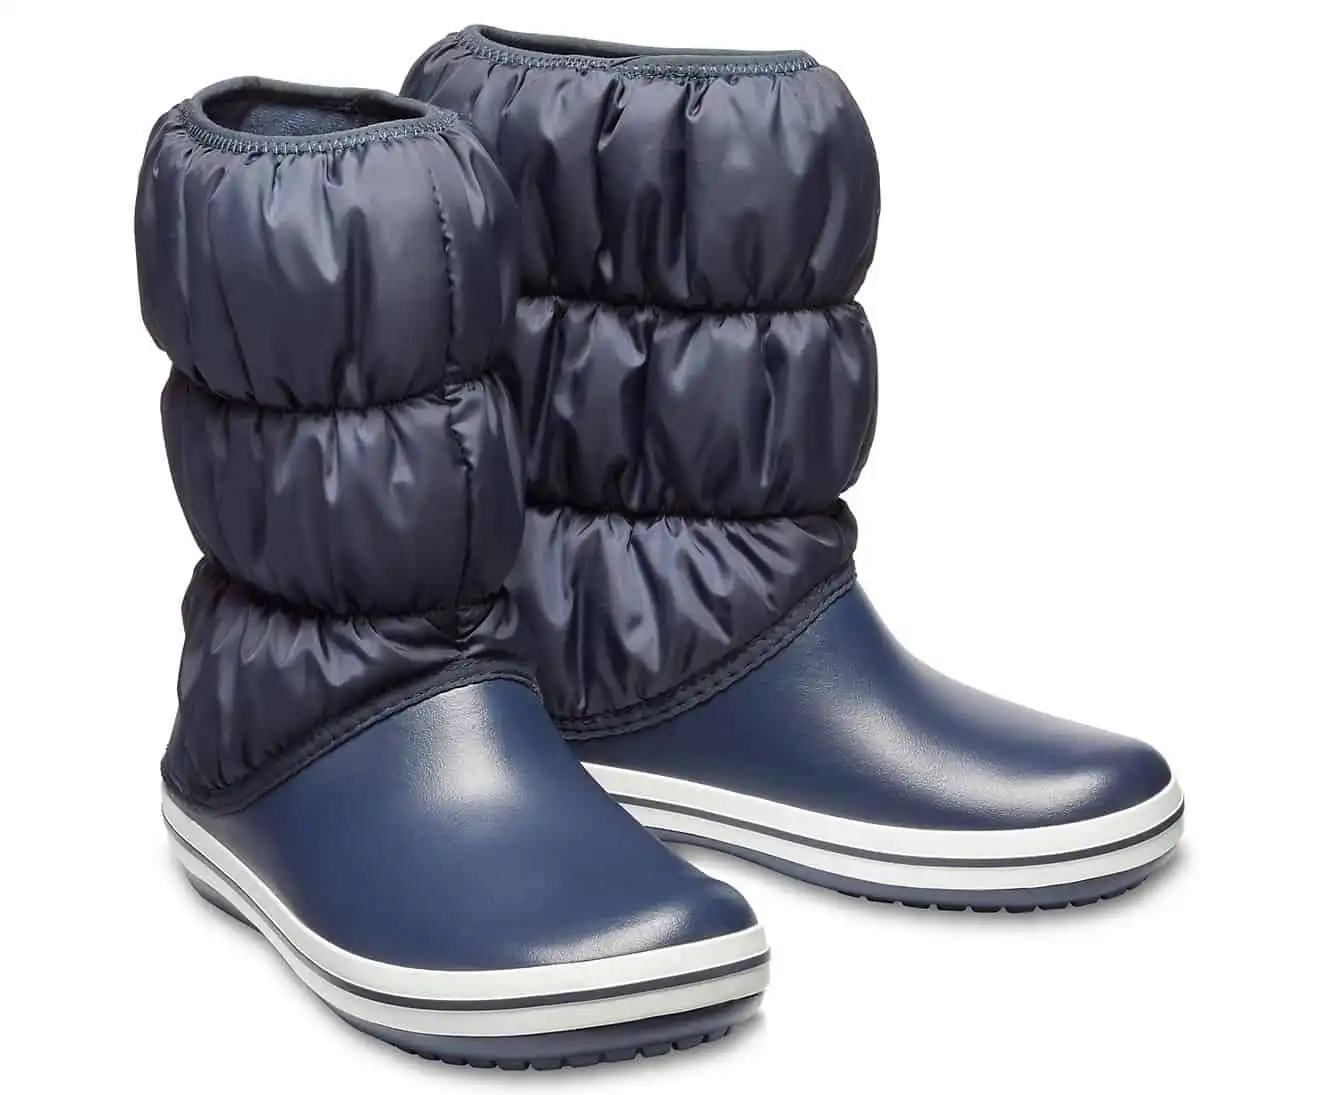 Crocs Women's Winter Puff Boot Puffer Shoes - Navy/White